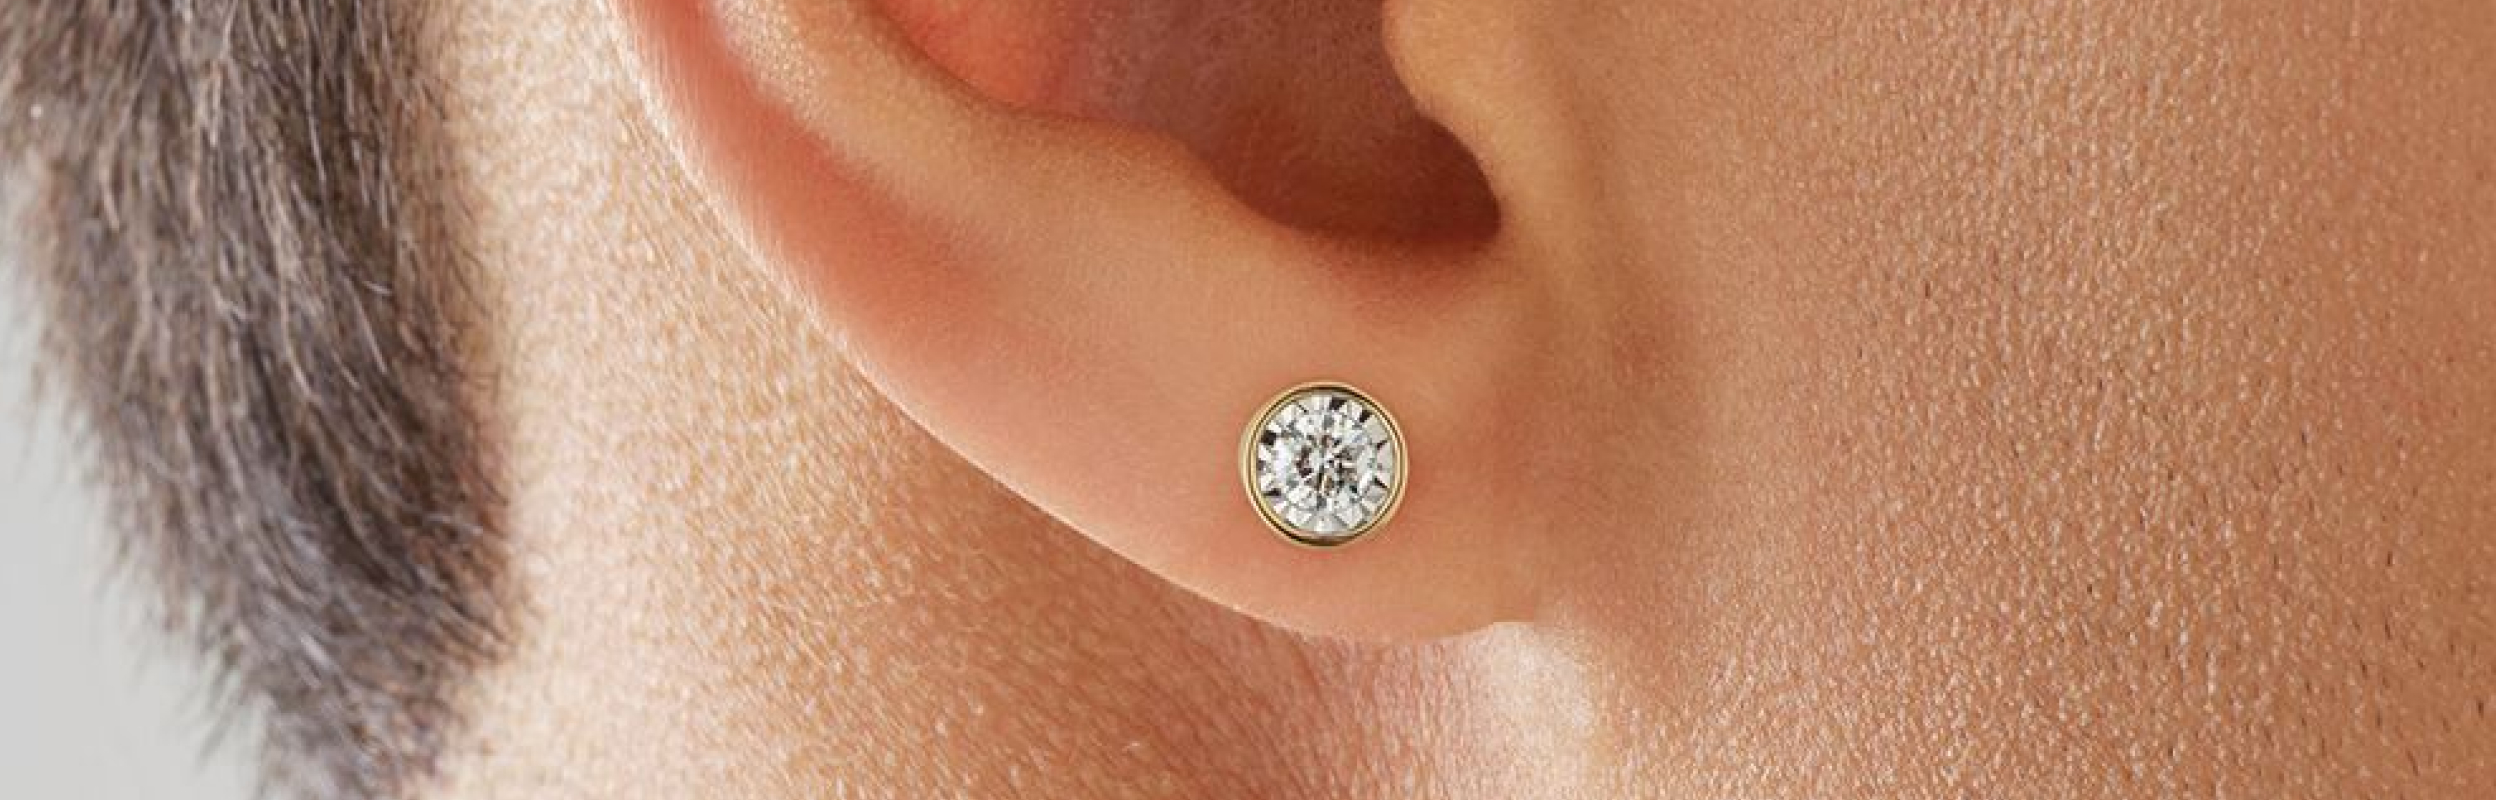 mens gold round diamond stud earring in ear